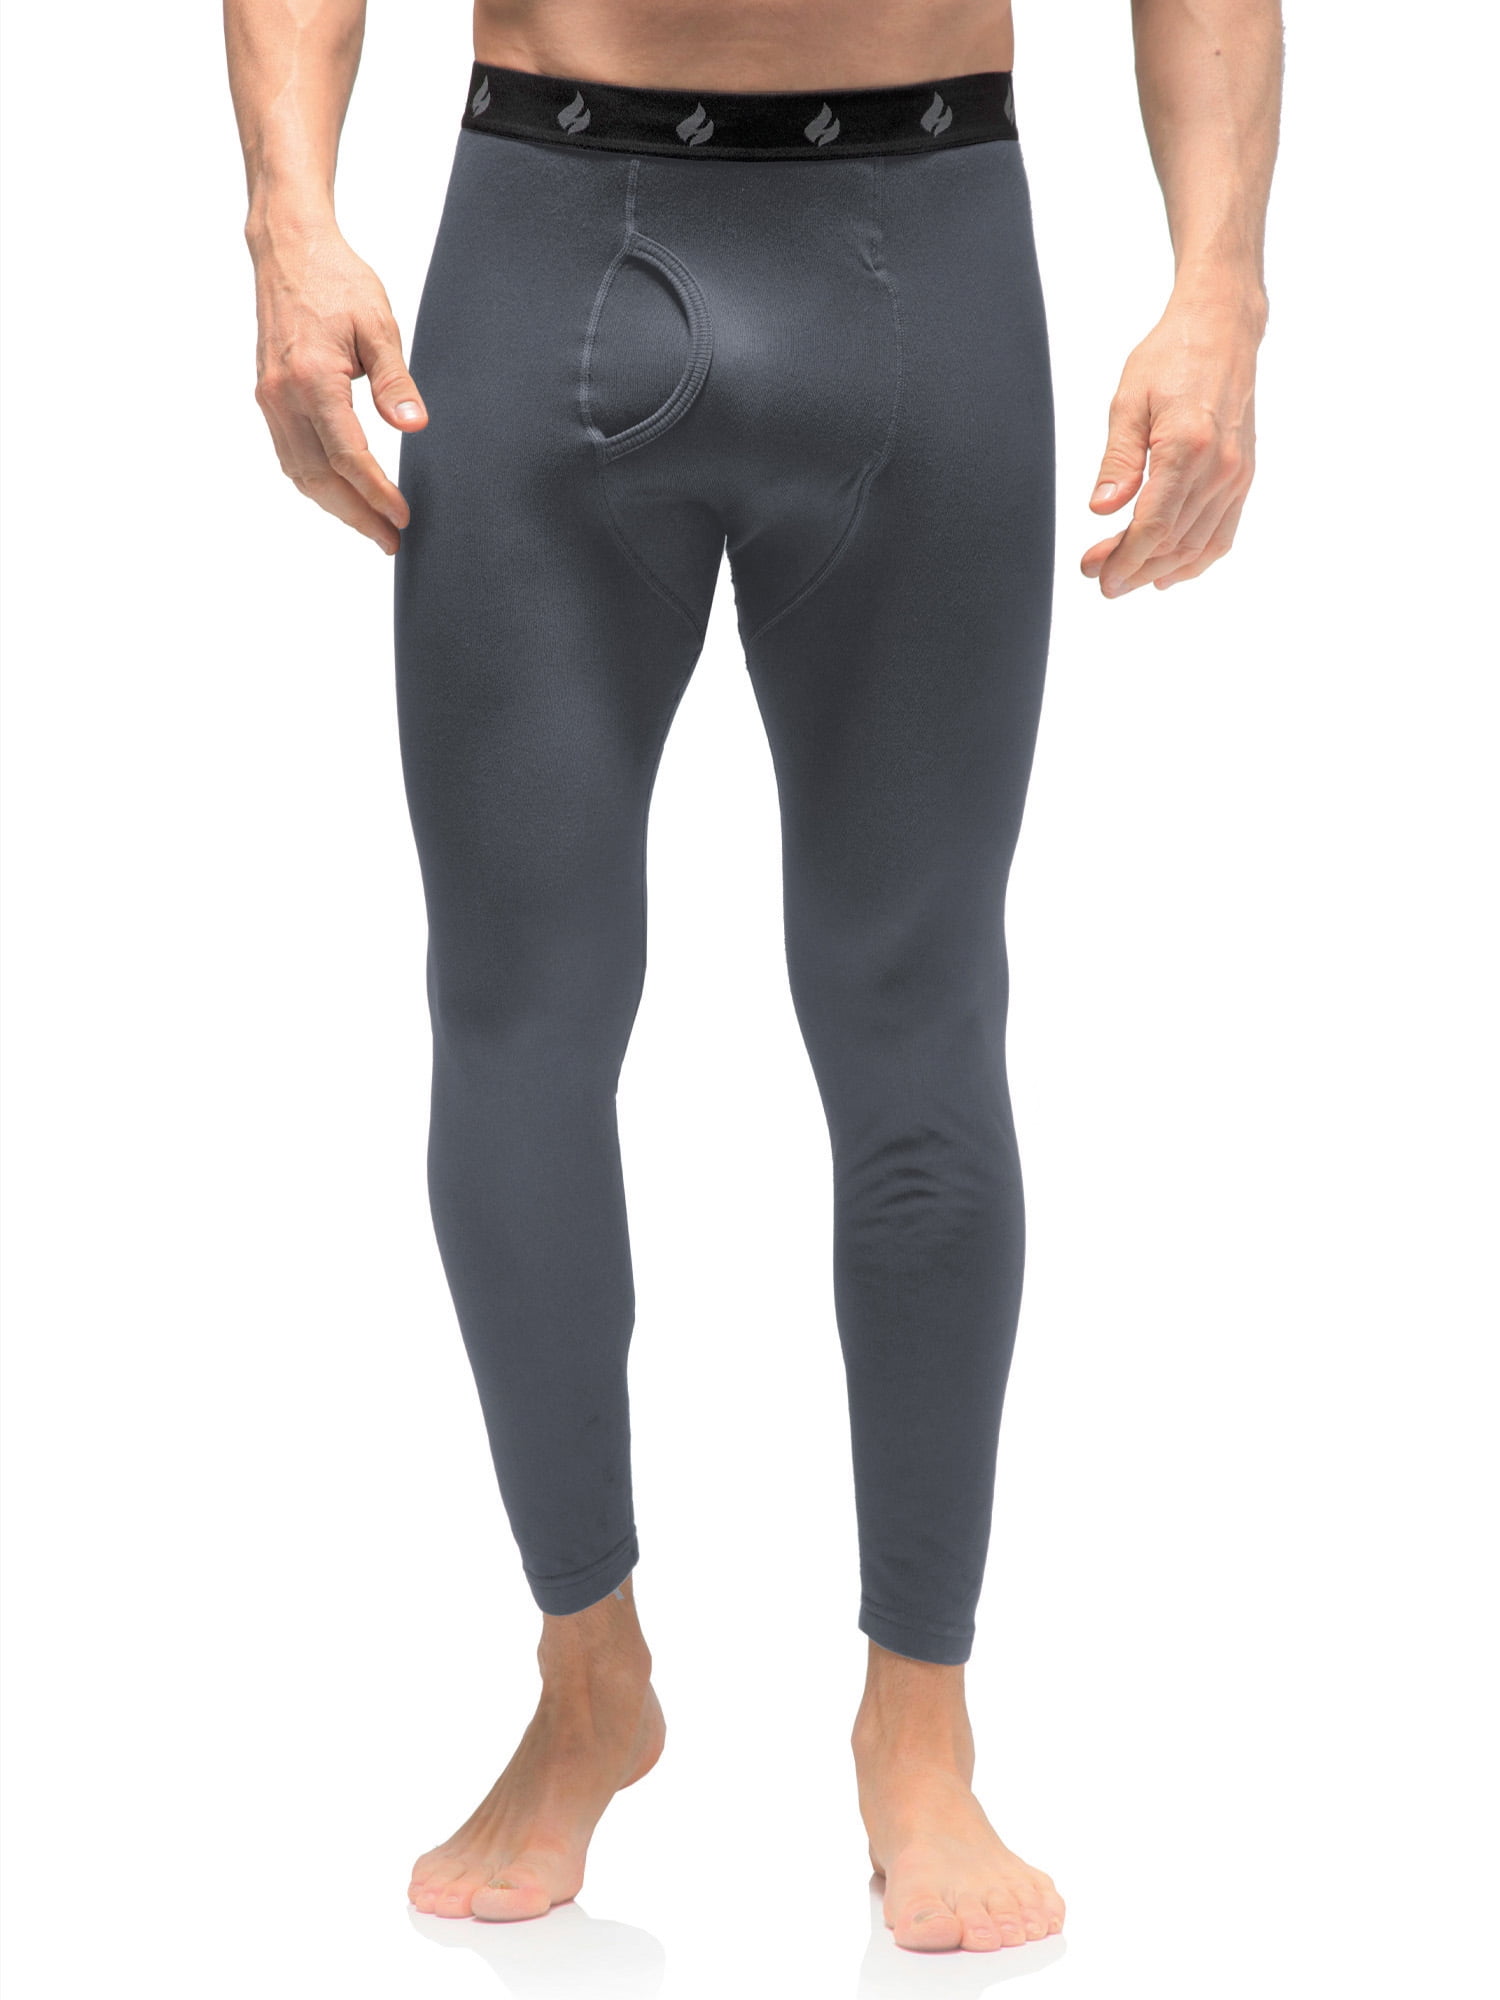 Mens Heat Holder Thermal Underwear Long Johns Charcoal Grey 